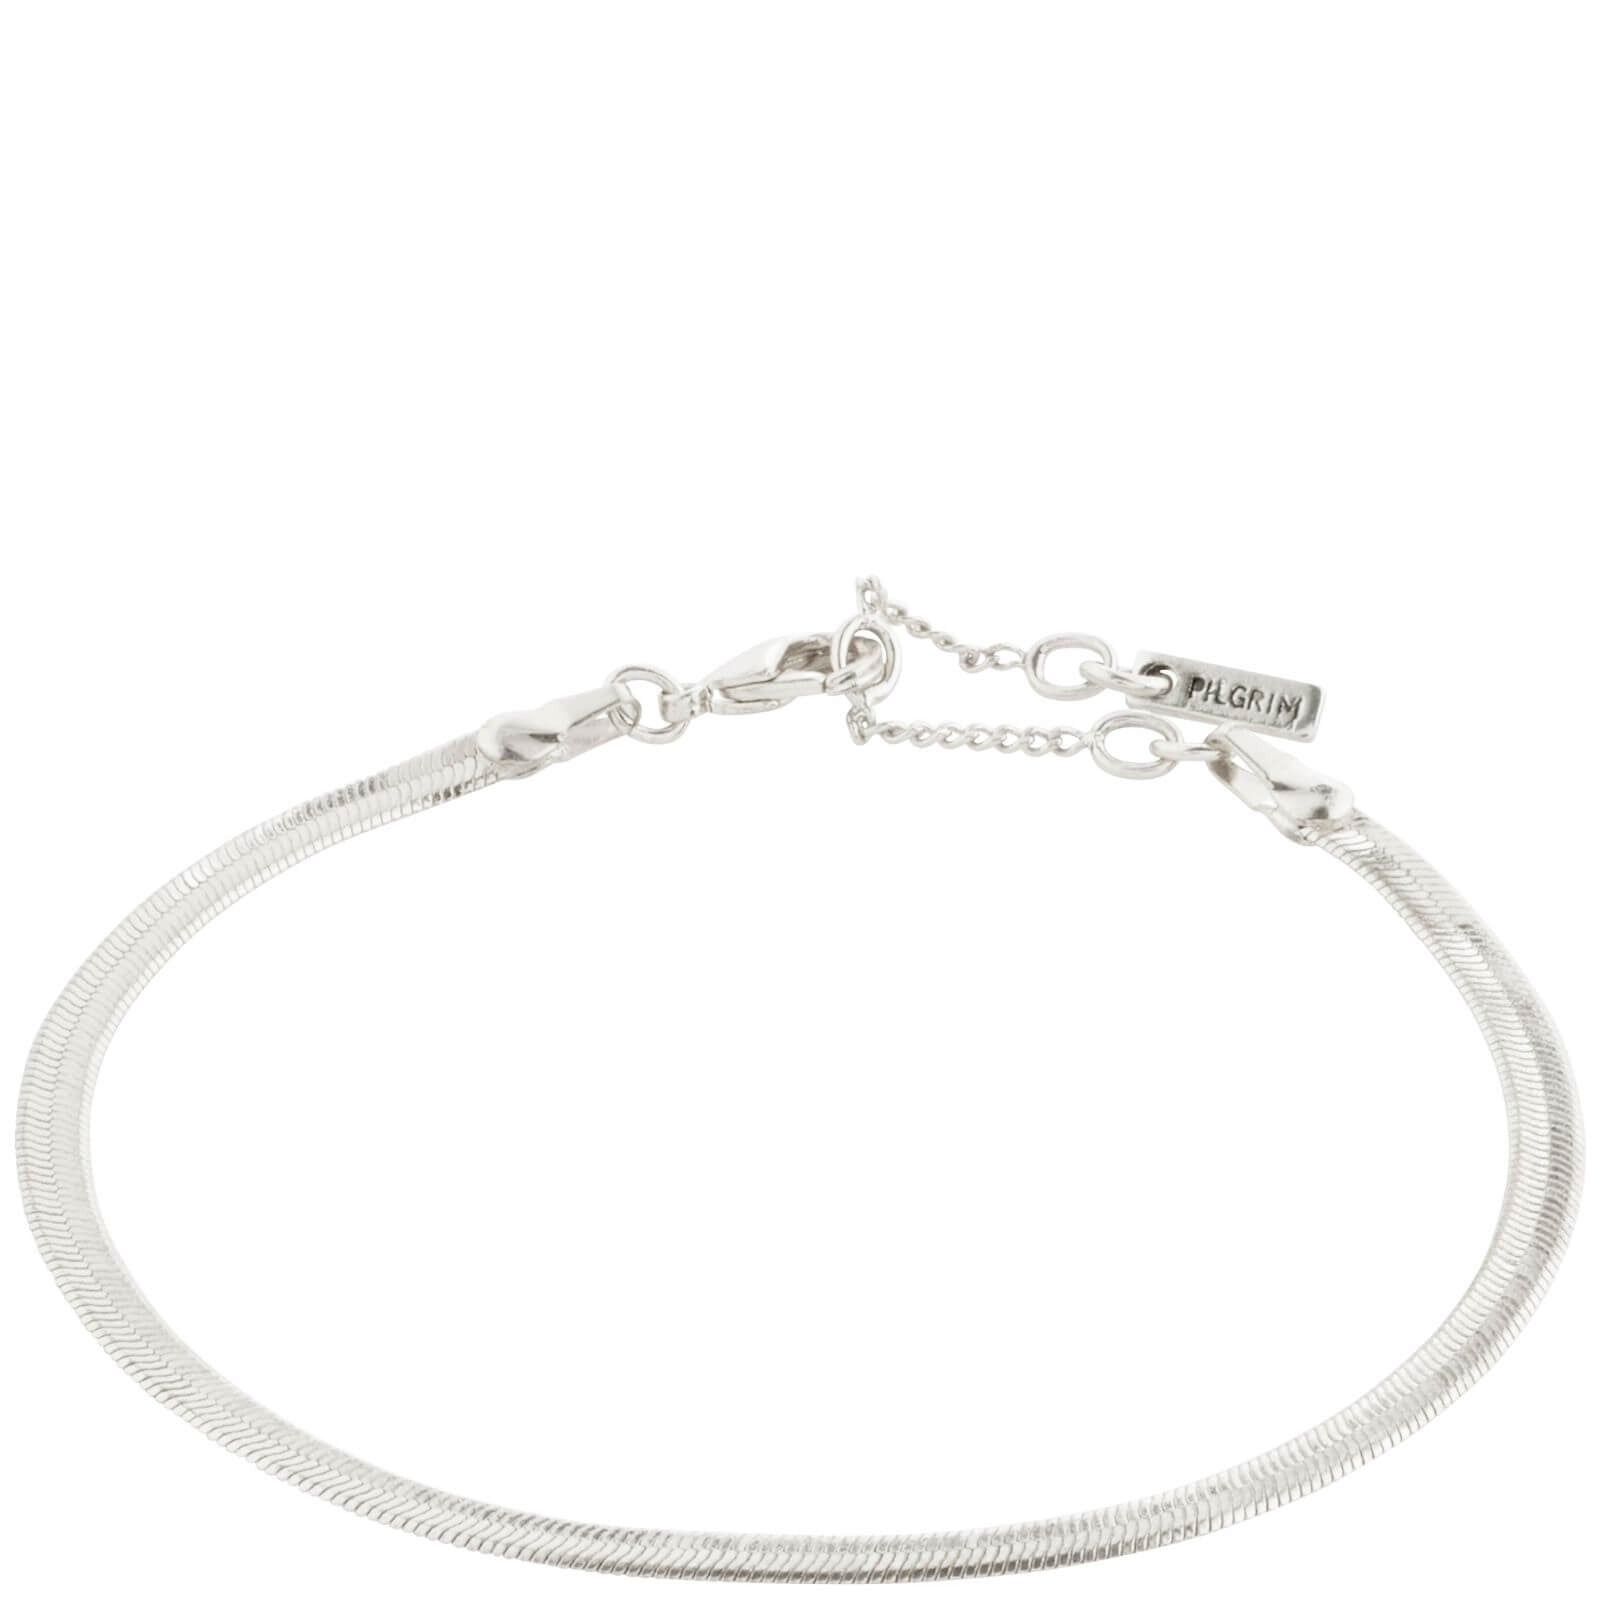 Modern Design Flat Snake Chain Bracelet and Necklace Purchase  Individually  Zafari Studio  Jewelry